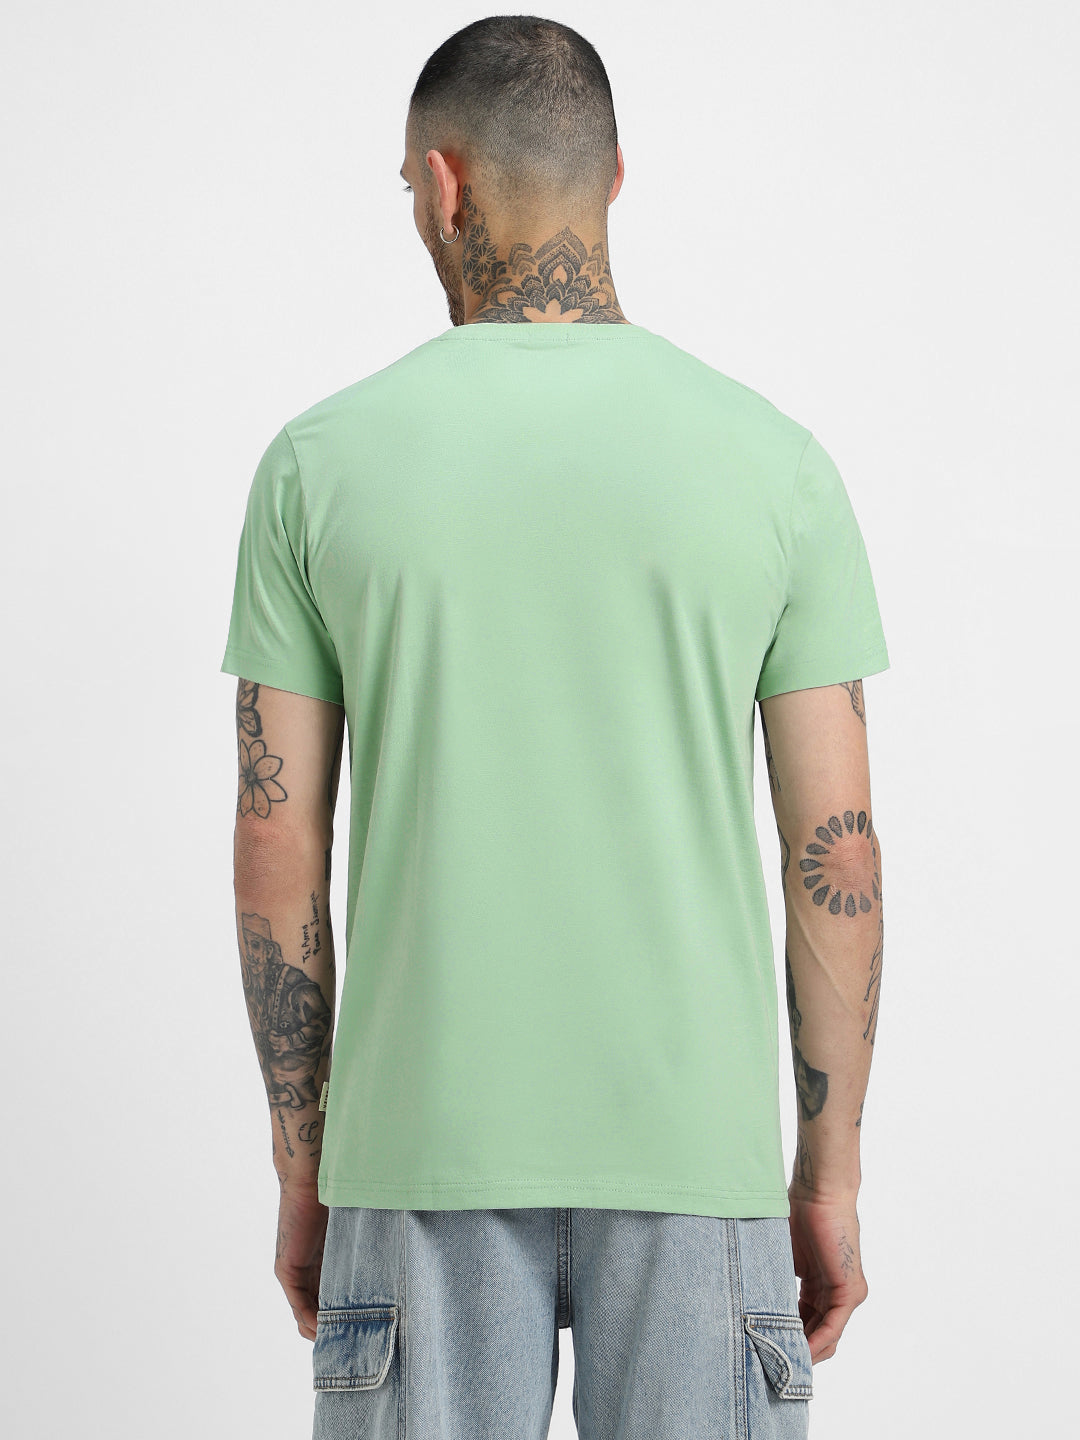 Fog Green Solid Men's Tshirt